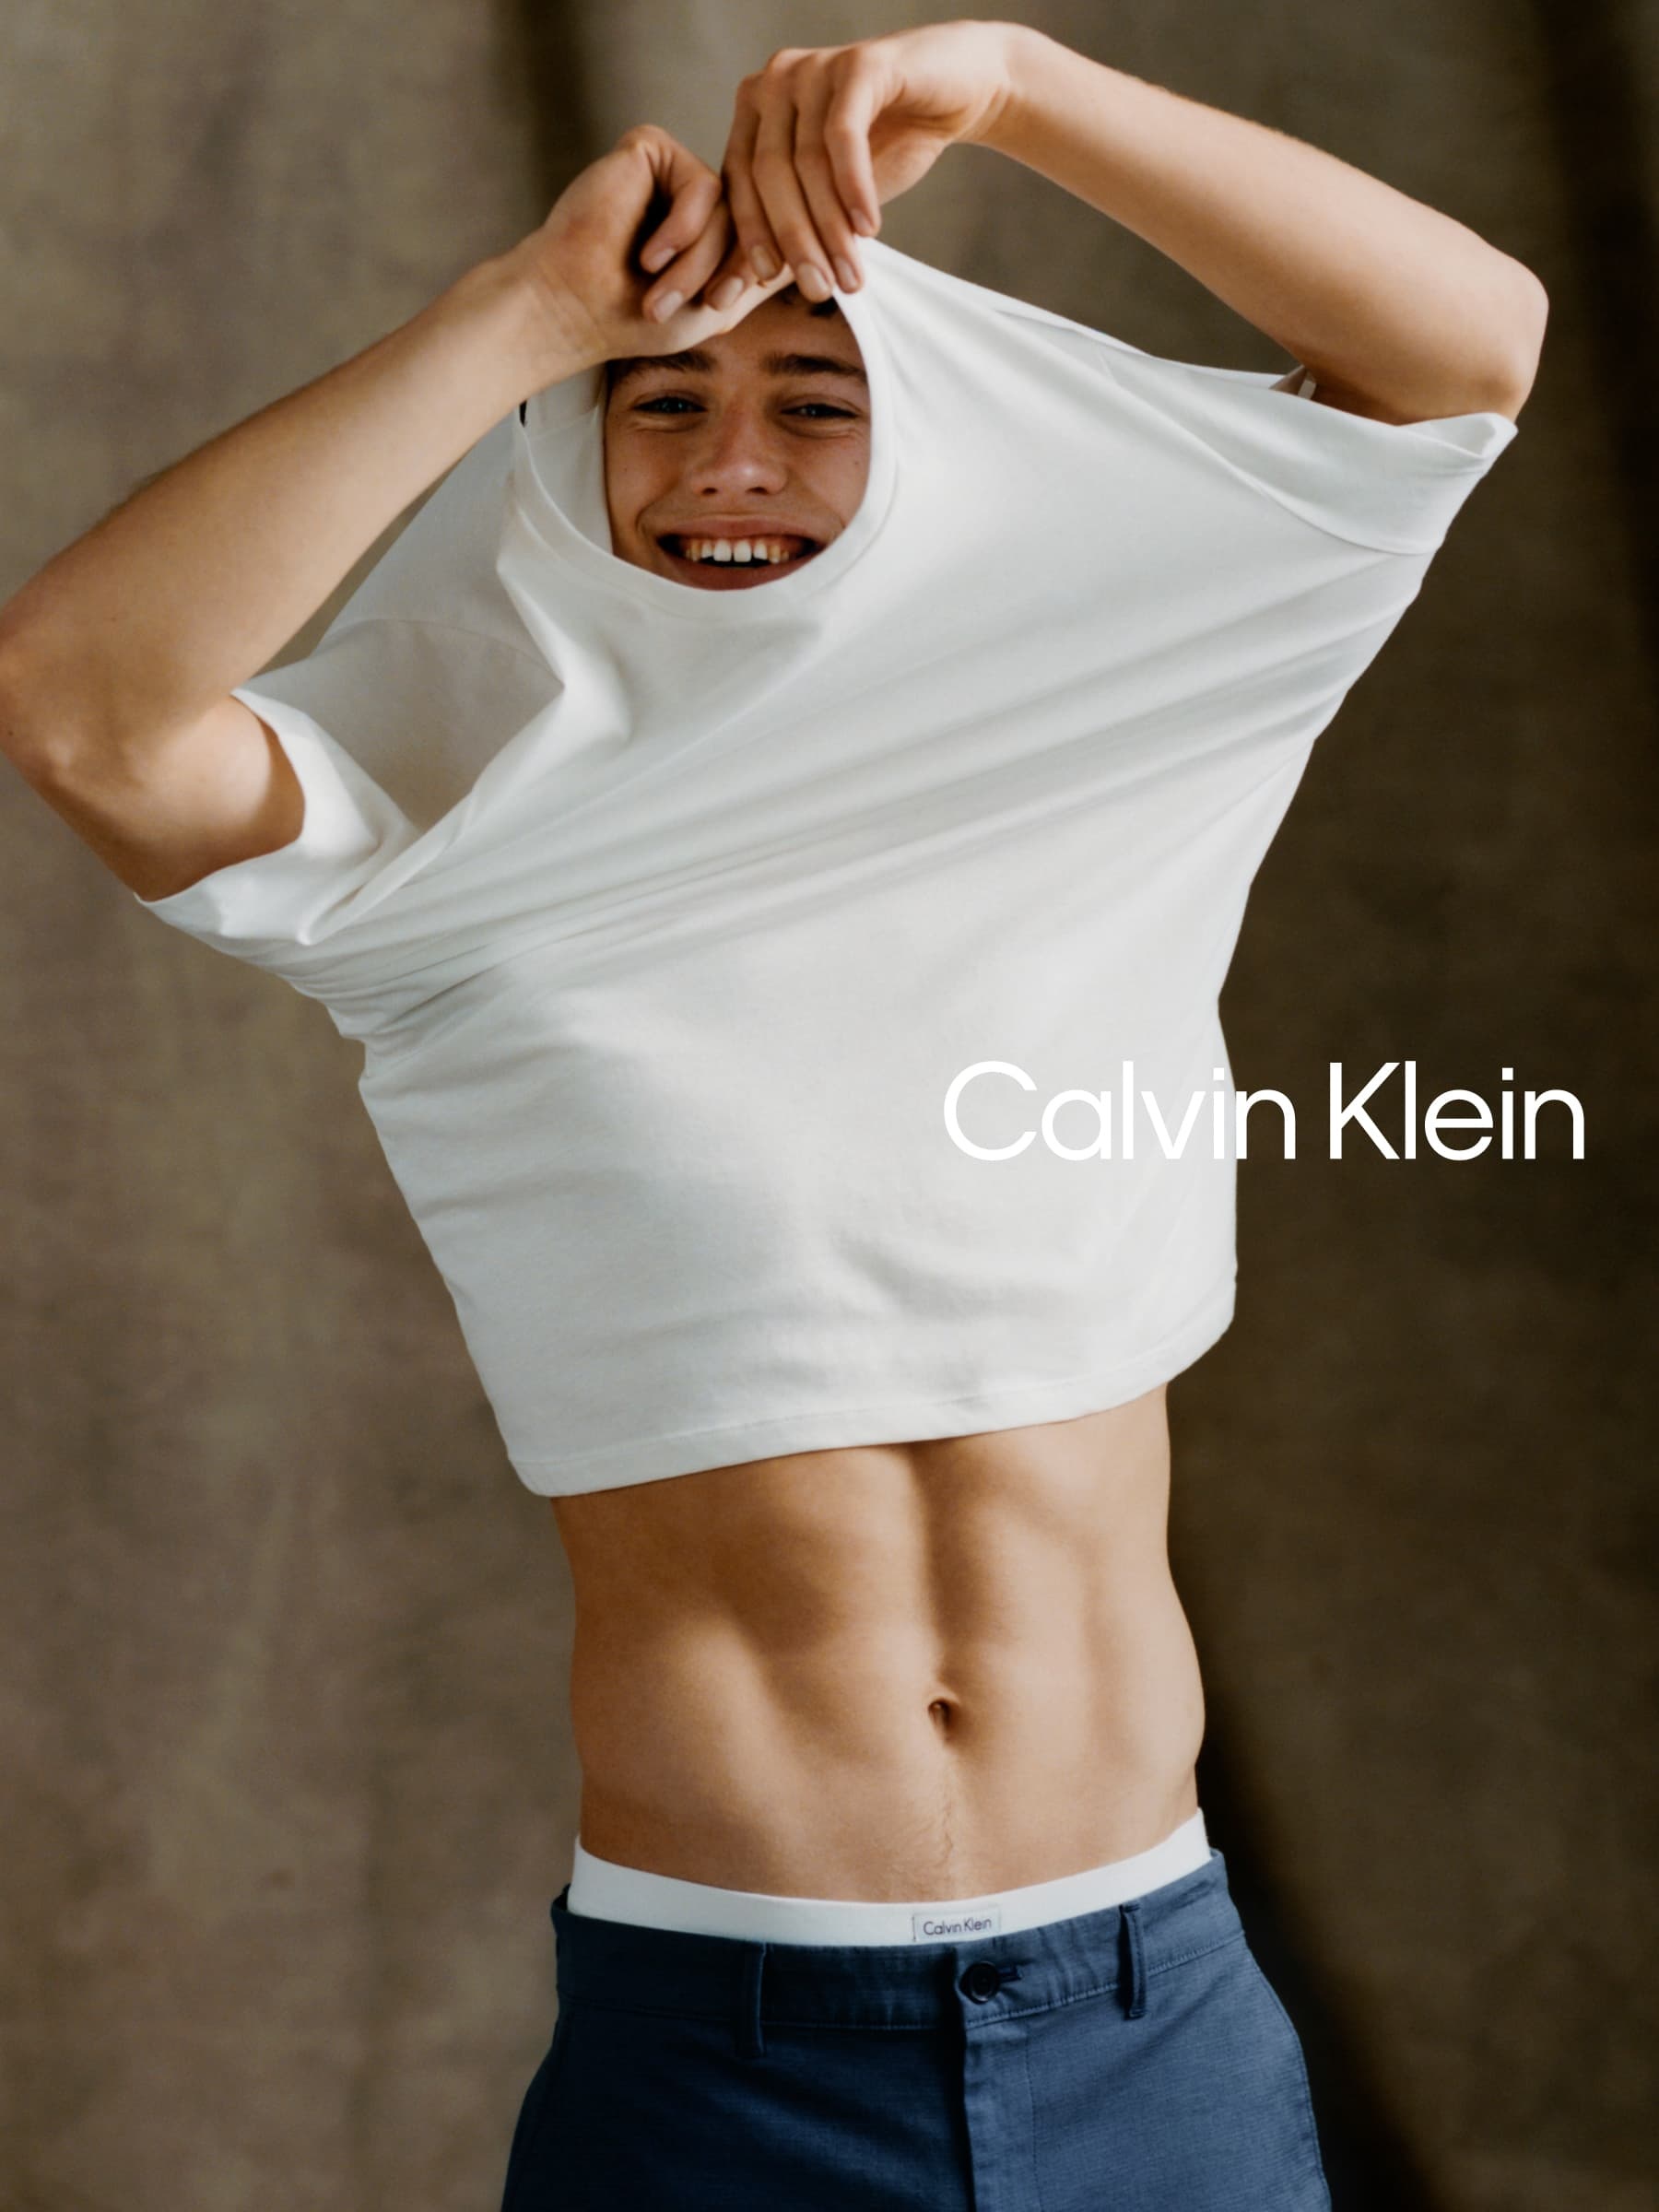 Calvin Klein Sportswear Spring 2021 Campaign